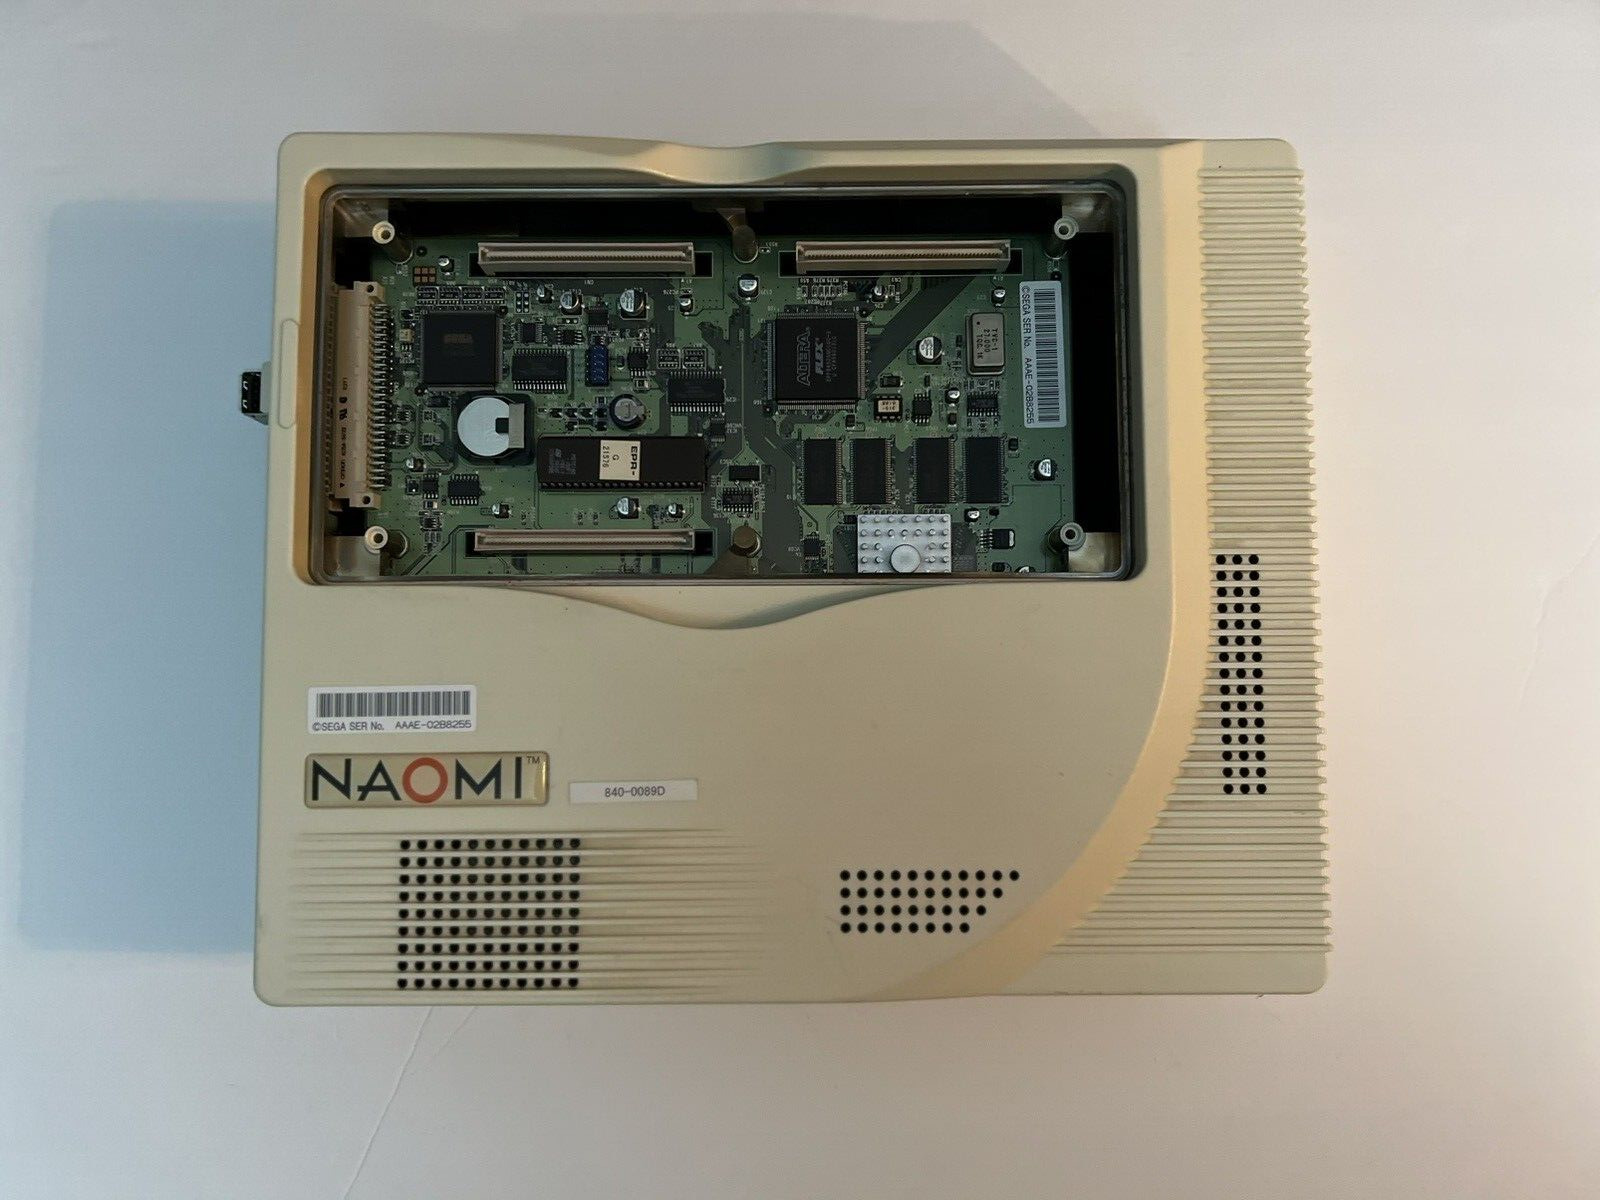 SEGA Naomi Motherboard Consoles Arcade Game Board PCB Tested Working US Seller